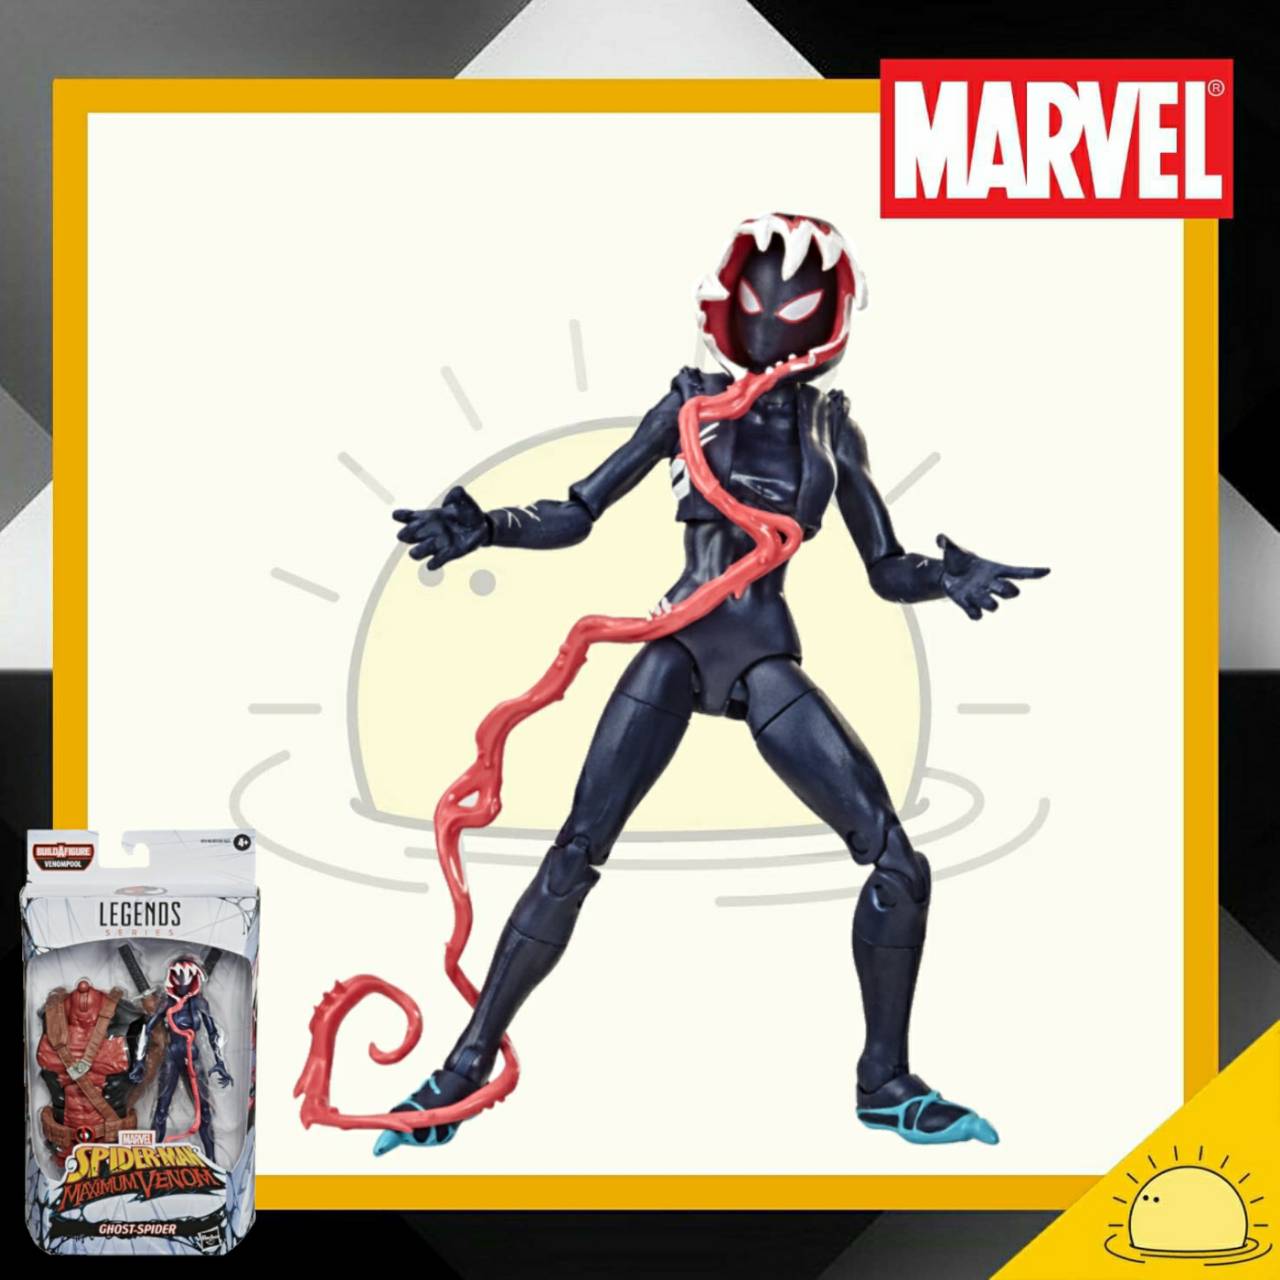 Ghost-spider : Marvel Legends Series Spider-man Maximum Venom Action Figure 6 นิ้ว ไม่มีชิ้นส่วนบัฟ (no baf) ฟิกเกอร์ ของเล่นของสะสม